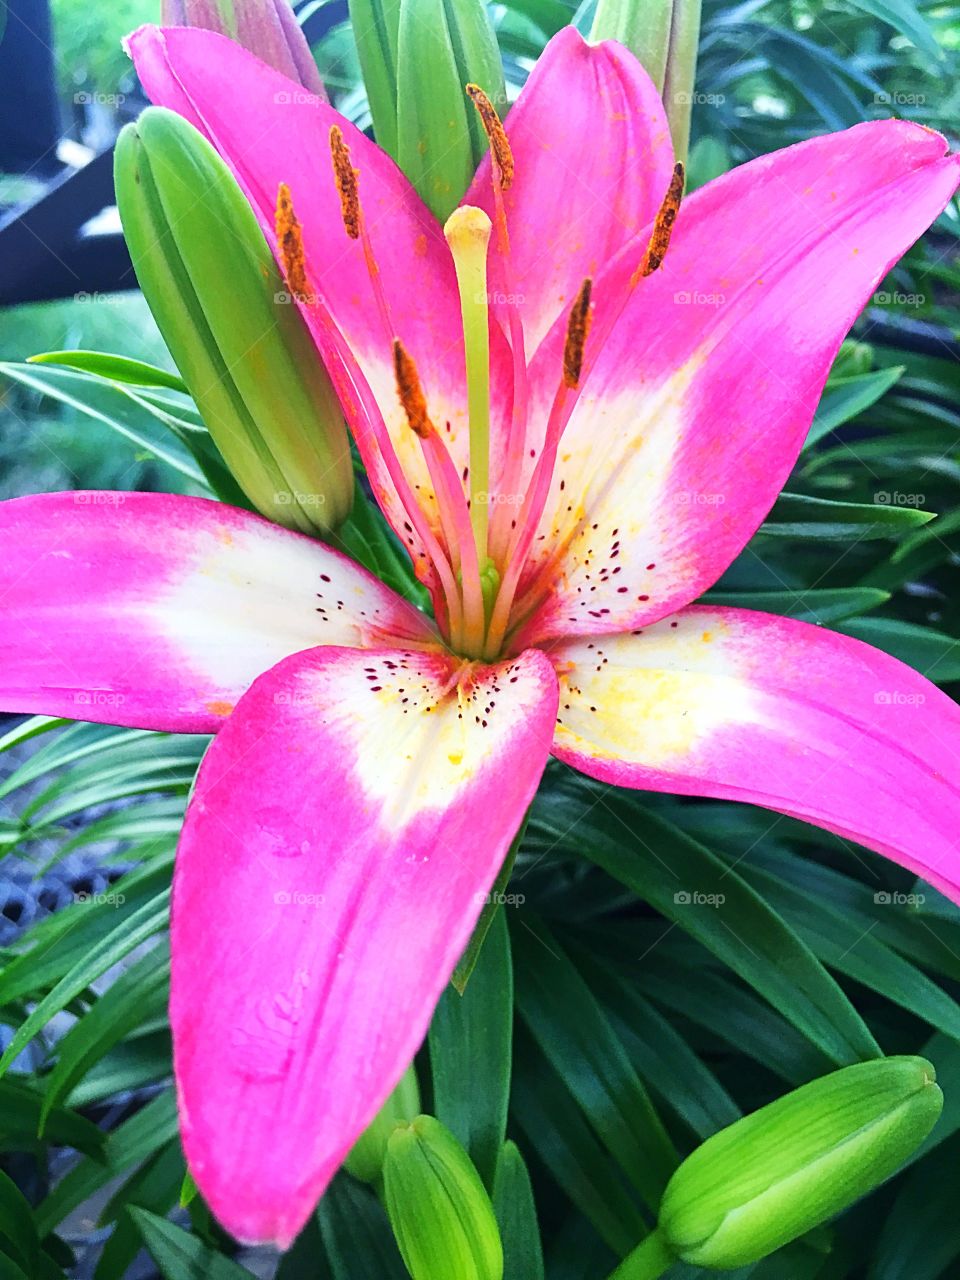 Bright pink “Stargazer” lily.